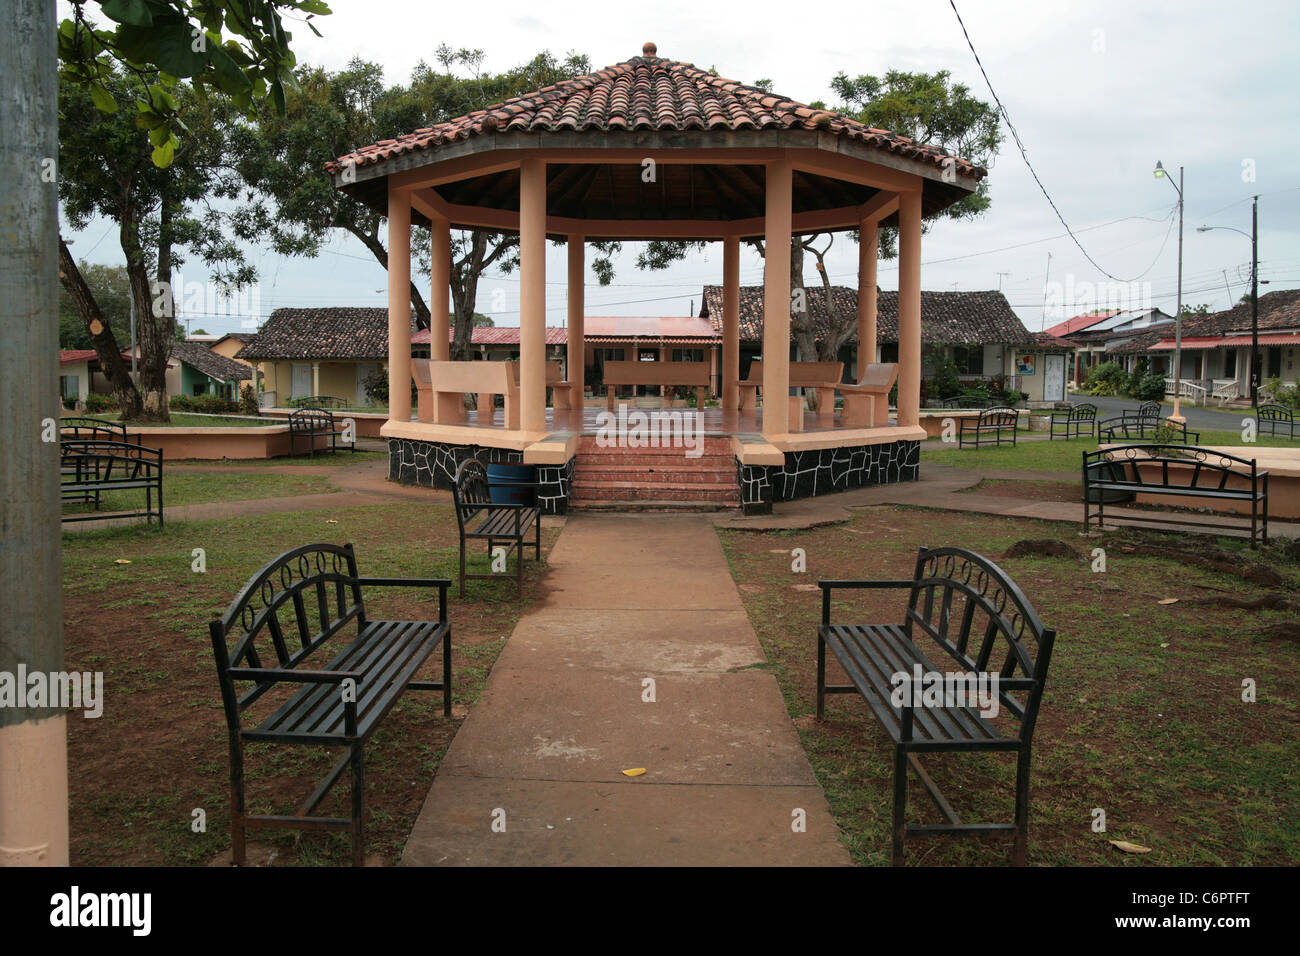 Gazebo at the main central plaza park of a small rural town of the Azuero (Los Santos Herrera) region of Panama, exterior bench. Stock Photo